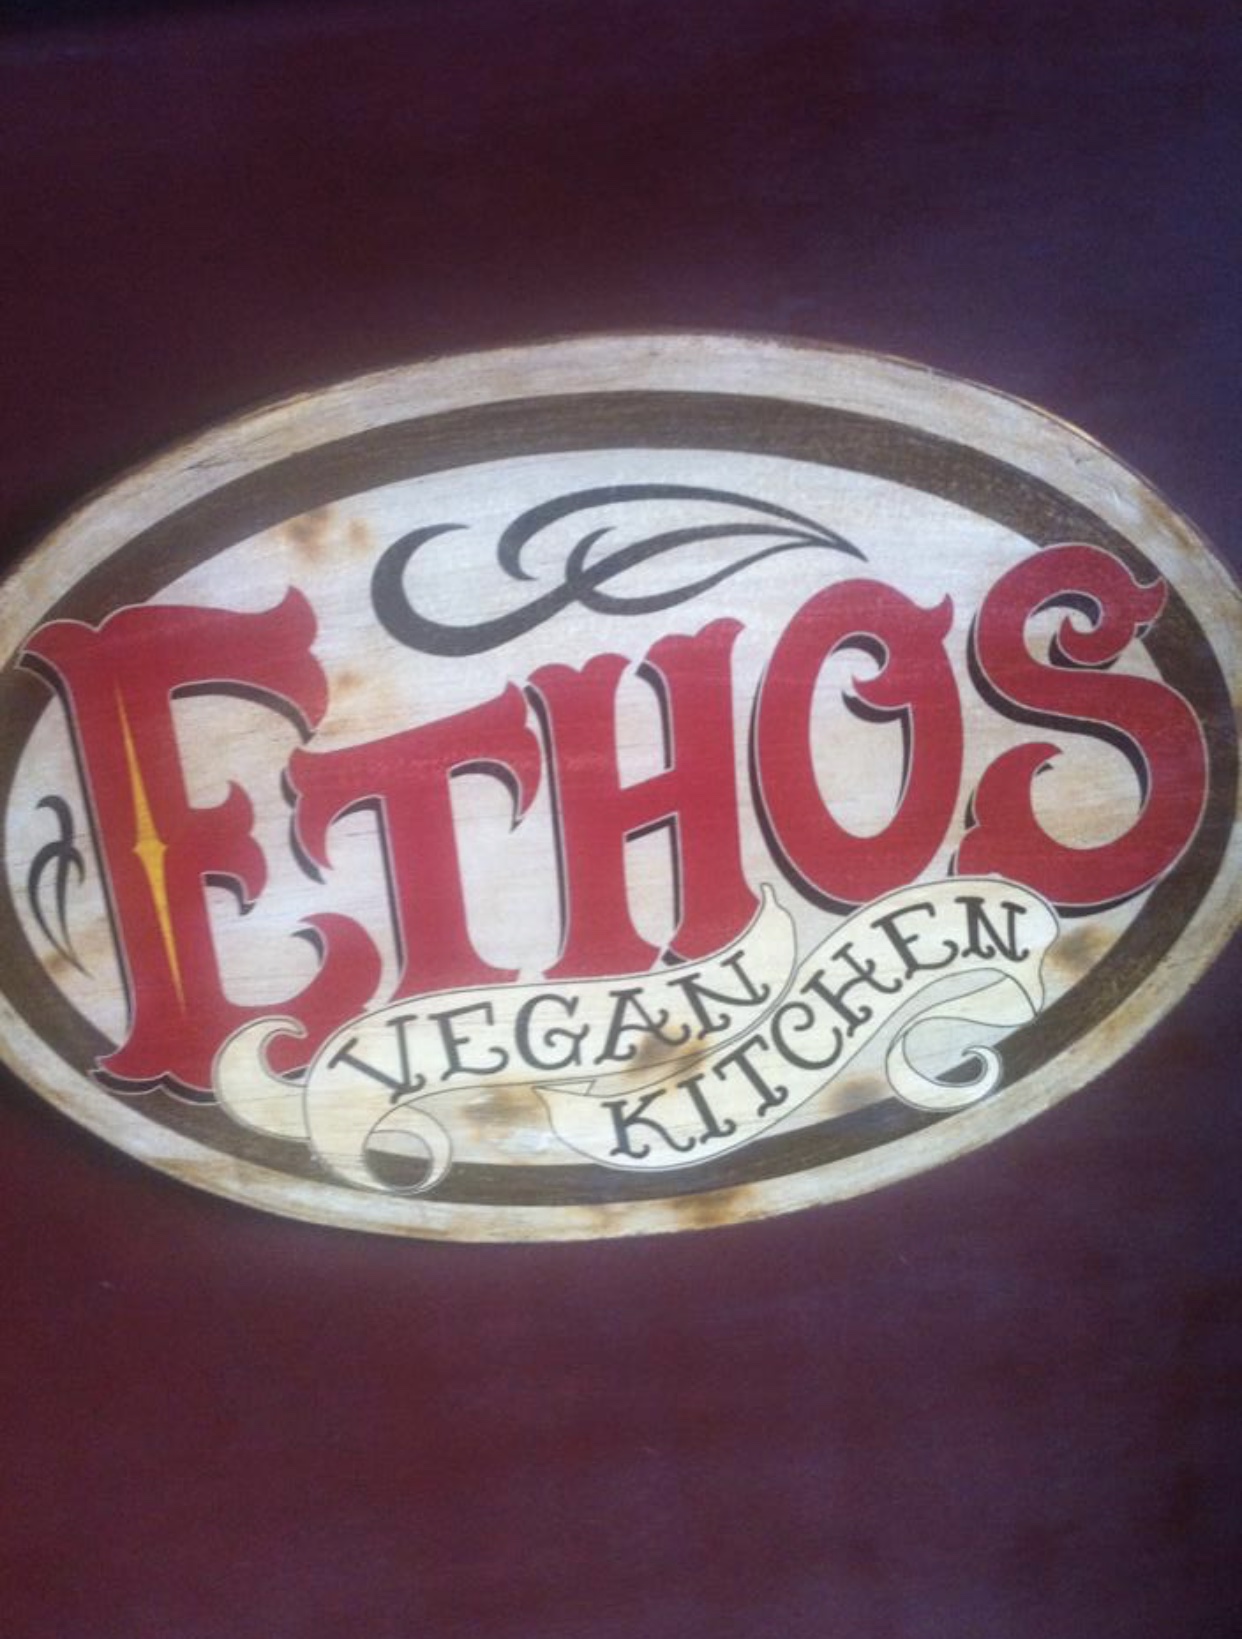 Sponsor Ethos Vegan Kitchen